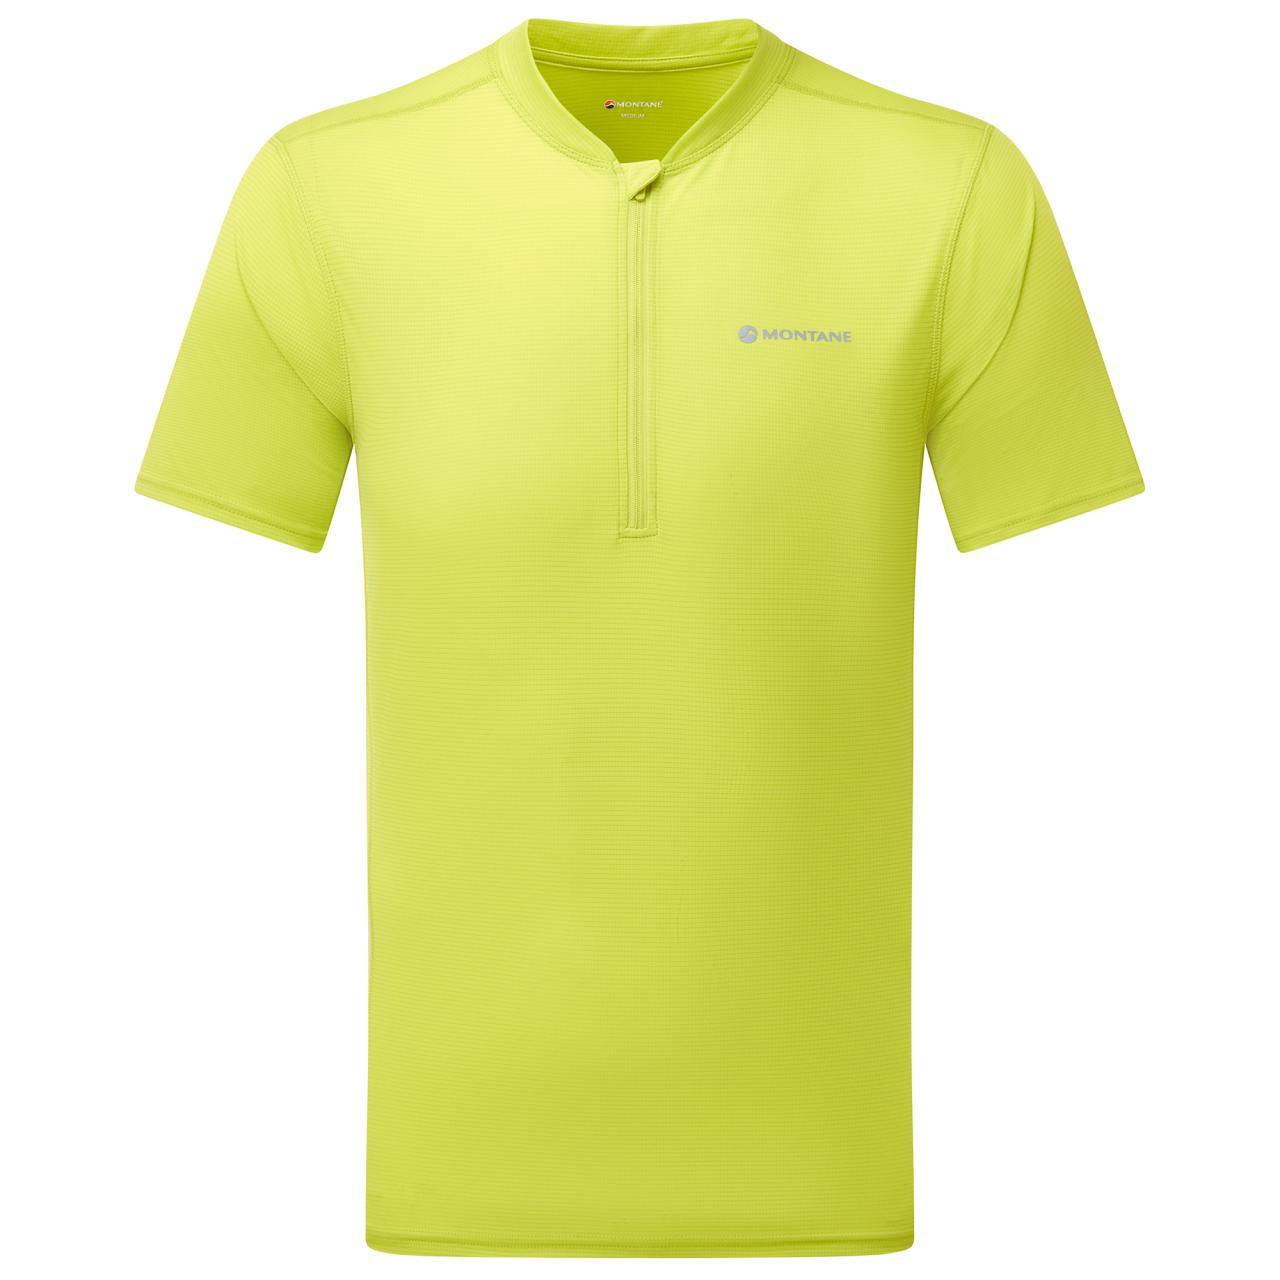 DART NANO ZIP T-SHIRT-CITRUS SPRING-L pánské triko žlutozelené